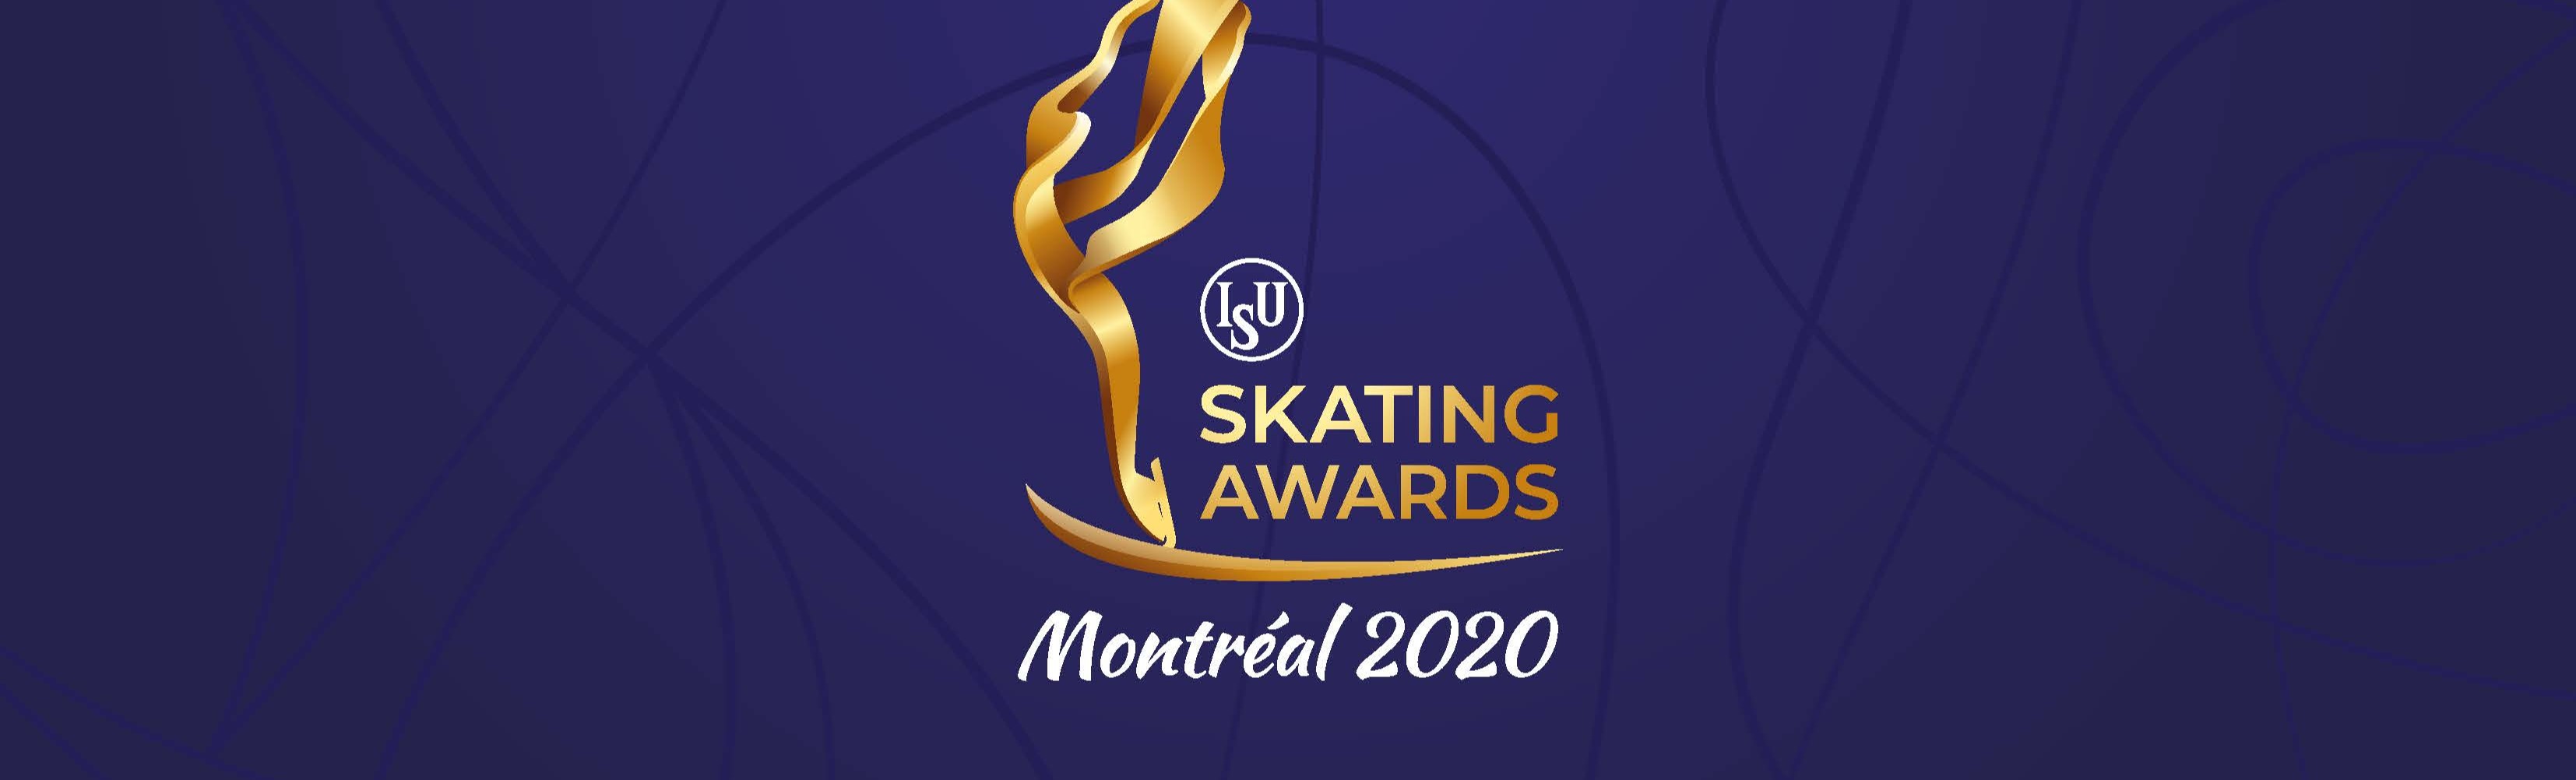 Премия ISU Skating Awards прошла в онлайн-формате